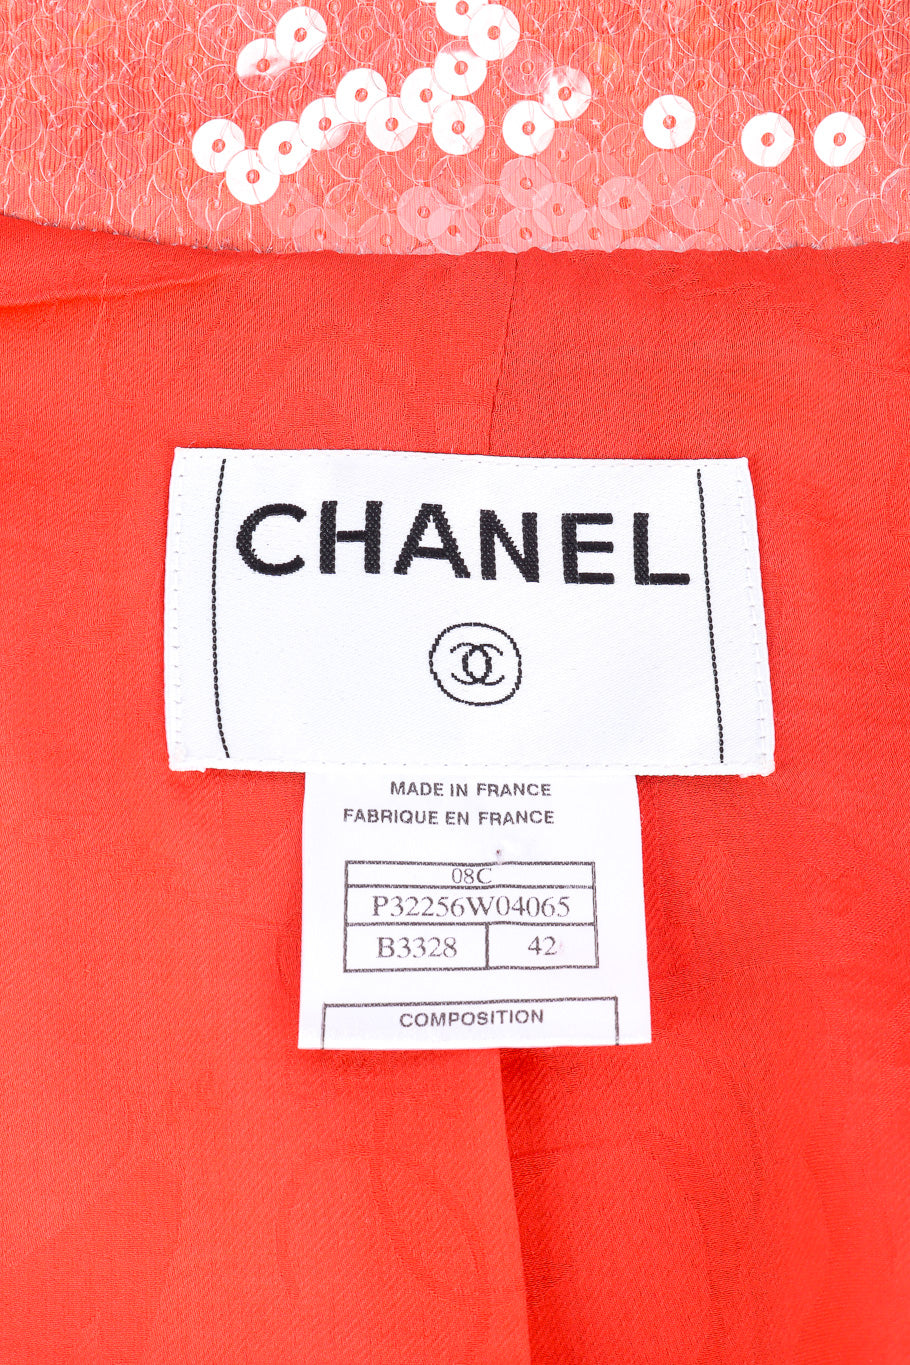 Bouclé tweed knit jacket by Chanel label  @recessla